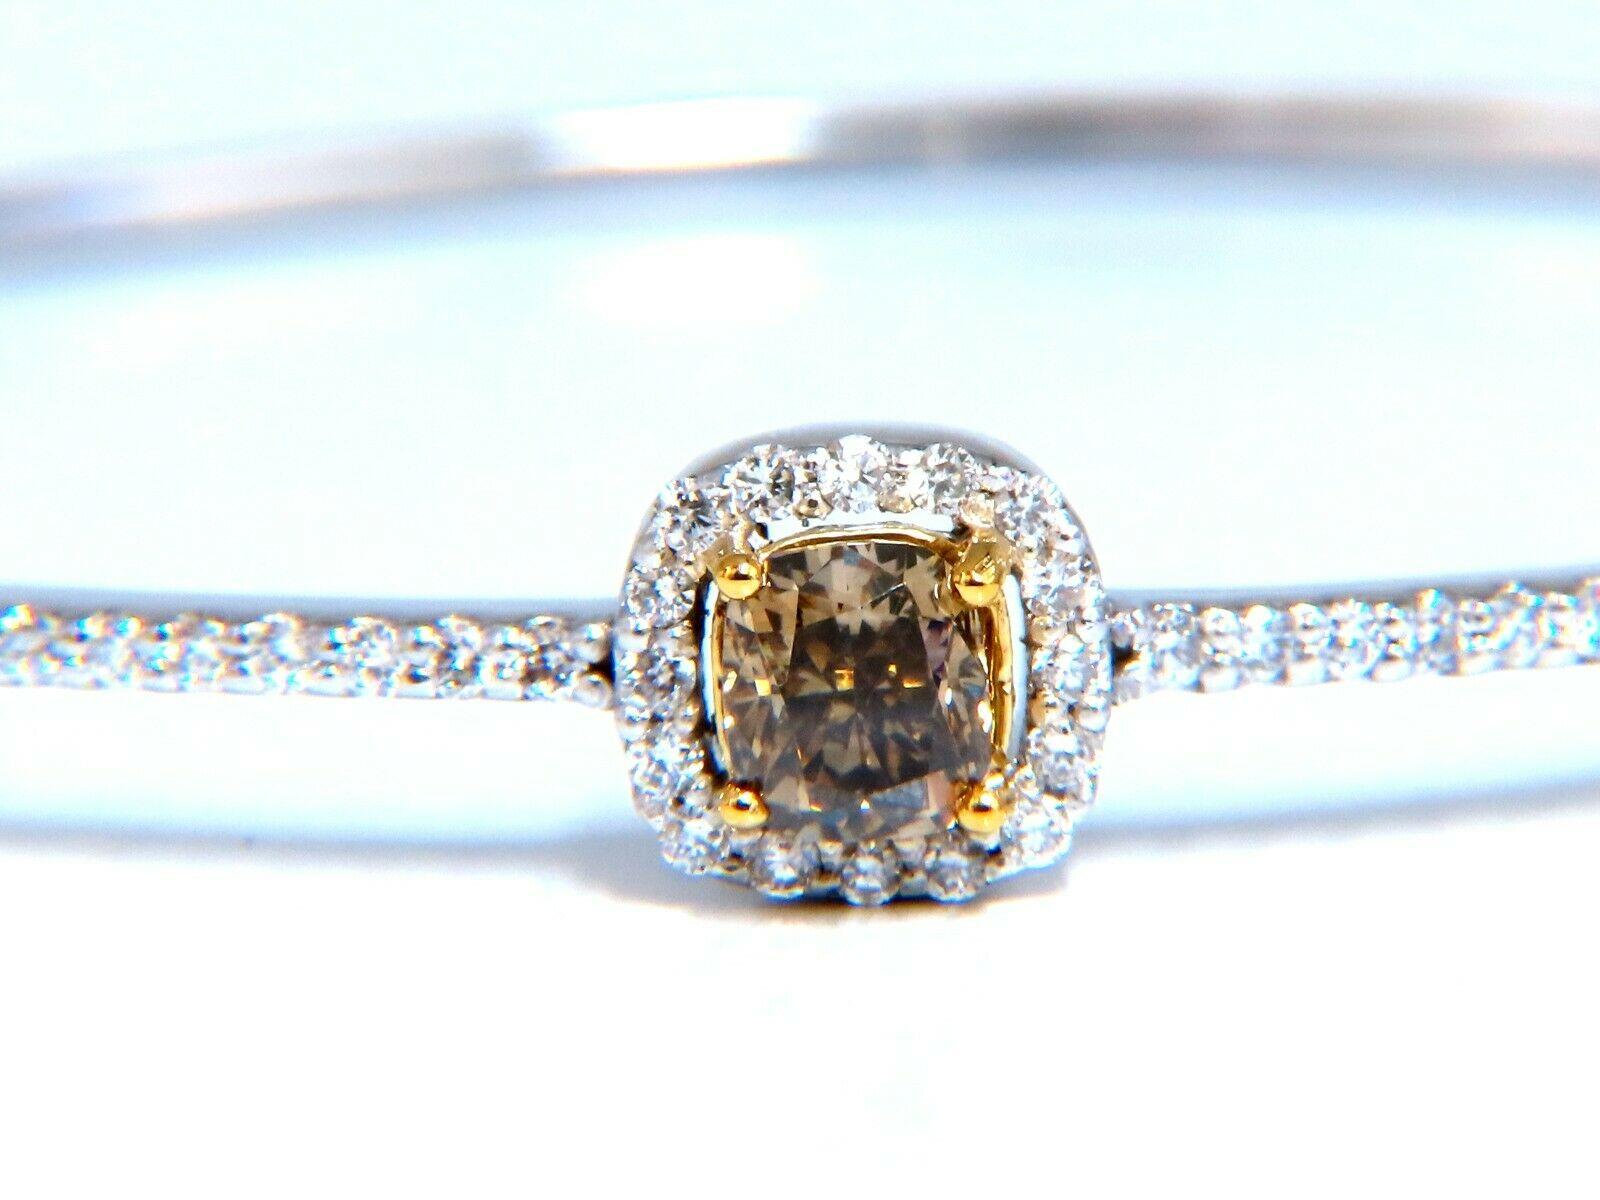 Fancy Diamond Bangle.

.56ct. Natural fancy color bracelet.

Yellow Brown Color

Cushion- Full cut

Vs-2 clarity.

.64ct Natural round diamonds

G-color Vs-2 Clarity

14kt. white gold 

10.1 Grams.

7.7 x 8.1mm top cluster

cluster depth: